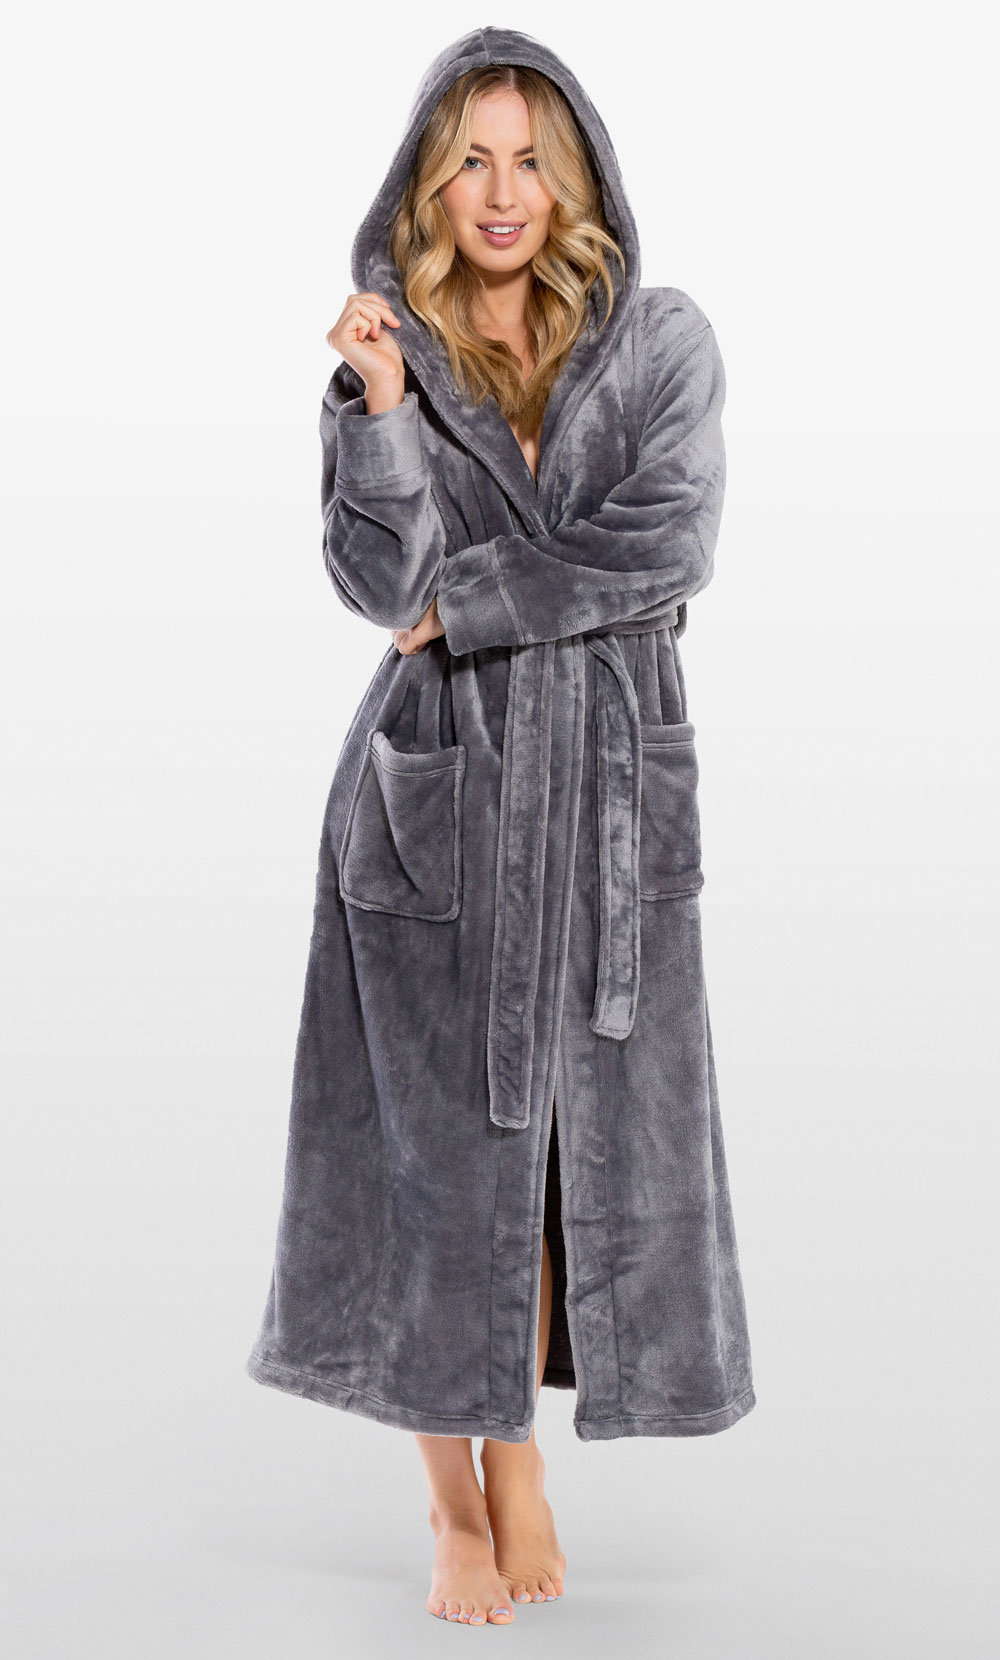 Super Soft Gray Plush Hooded Women's Robe-Robemart.com